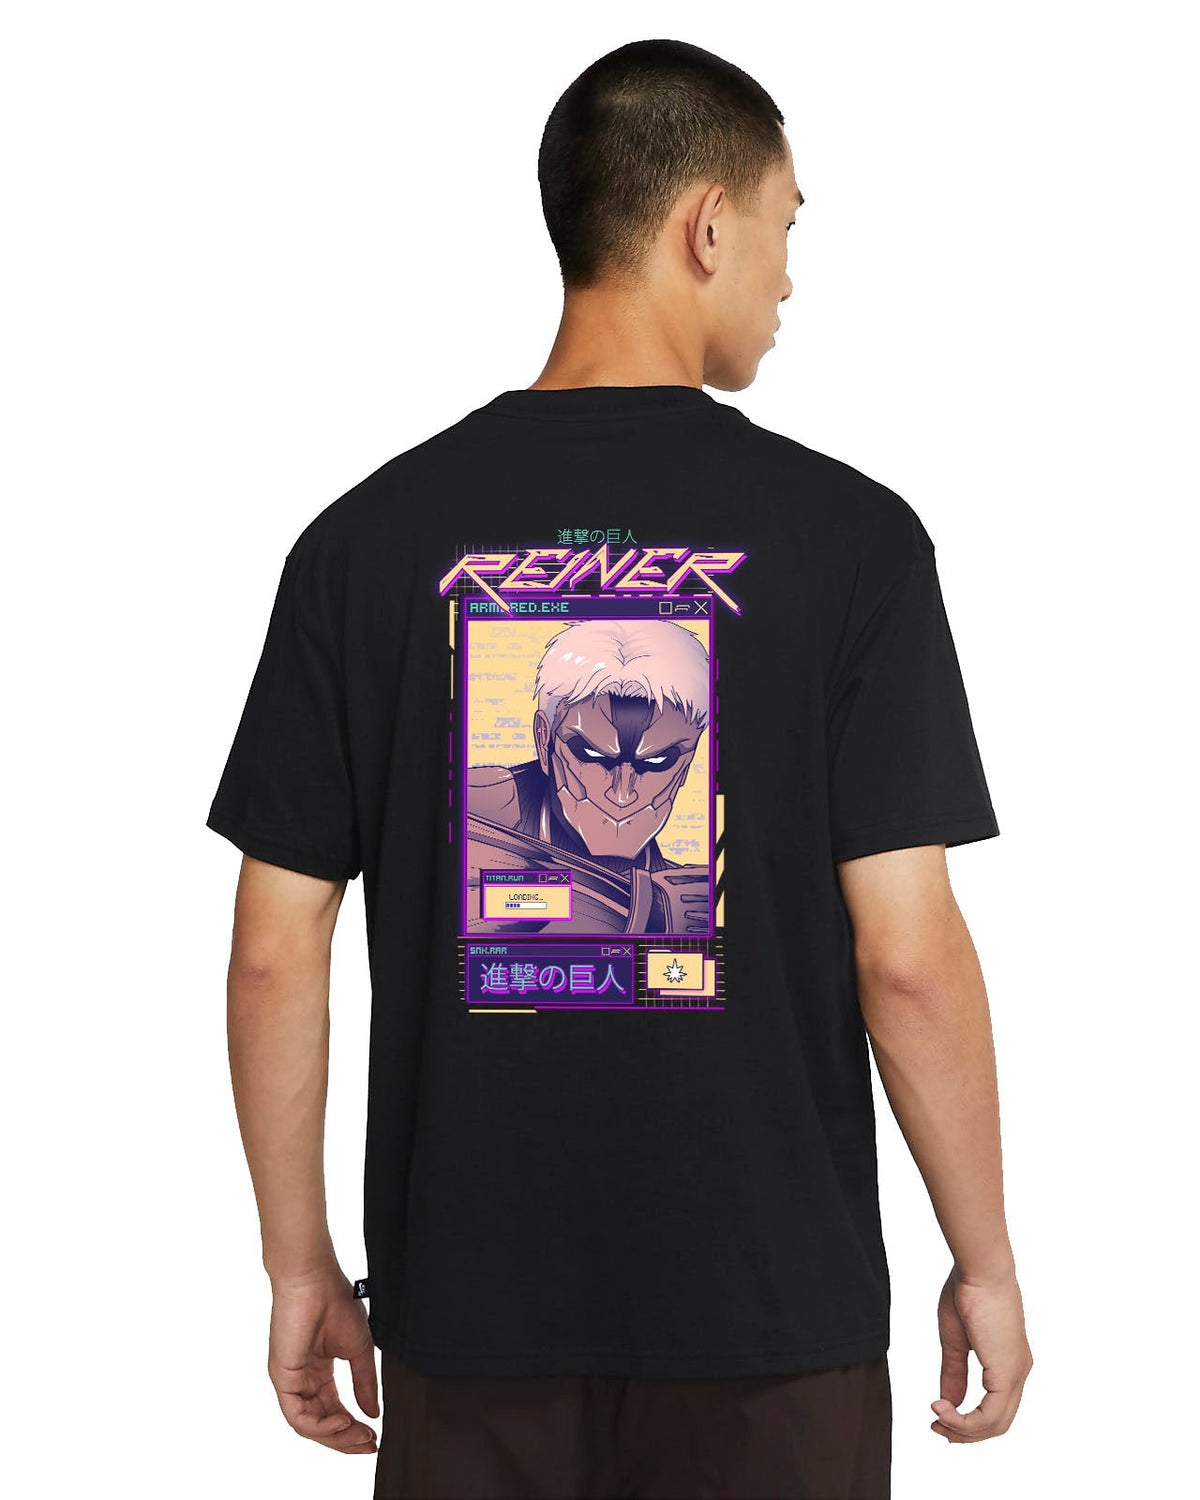 Reiner Braun - Attack on Titan T-shirt - SleekandPeek